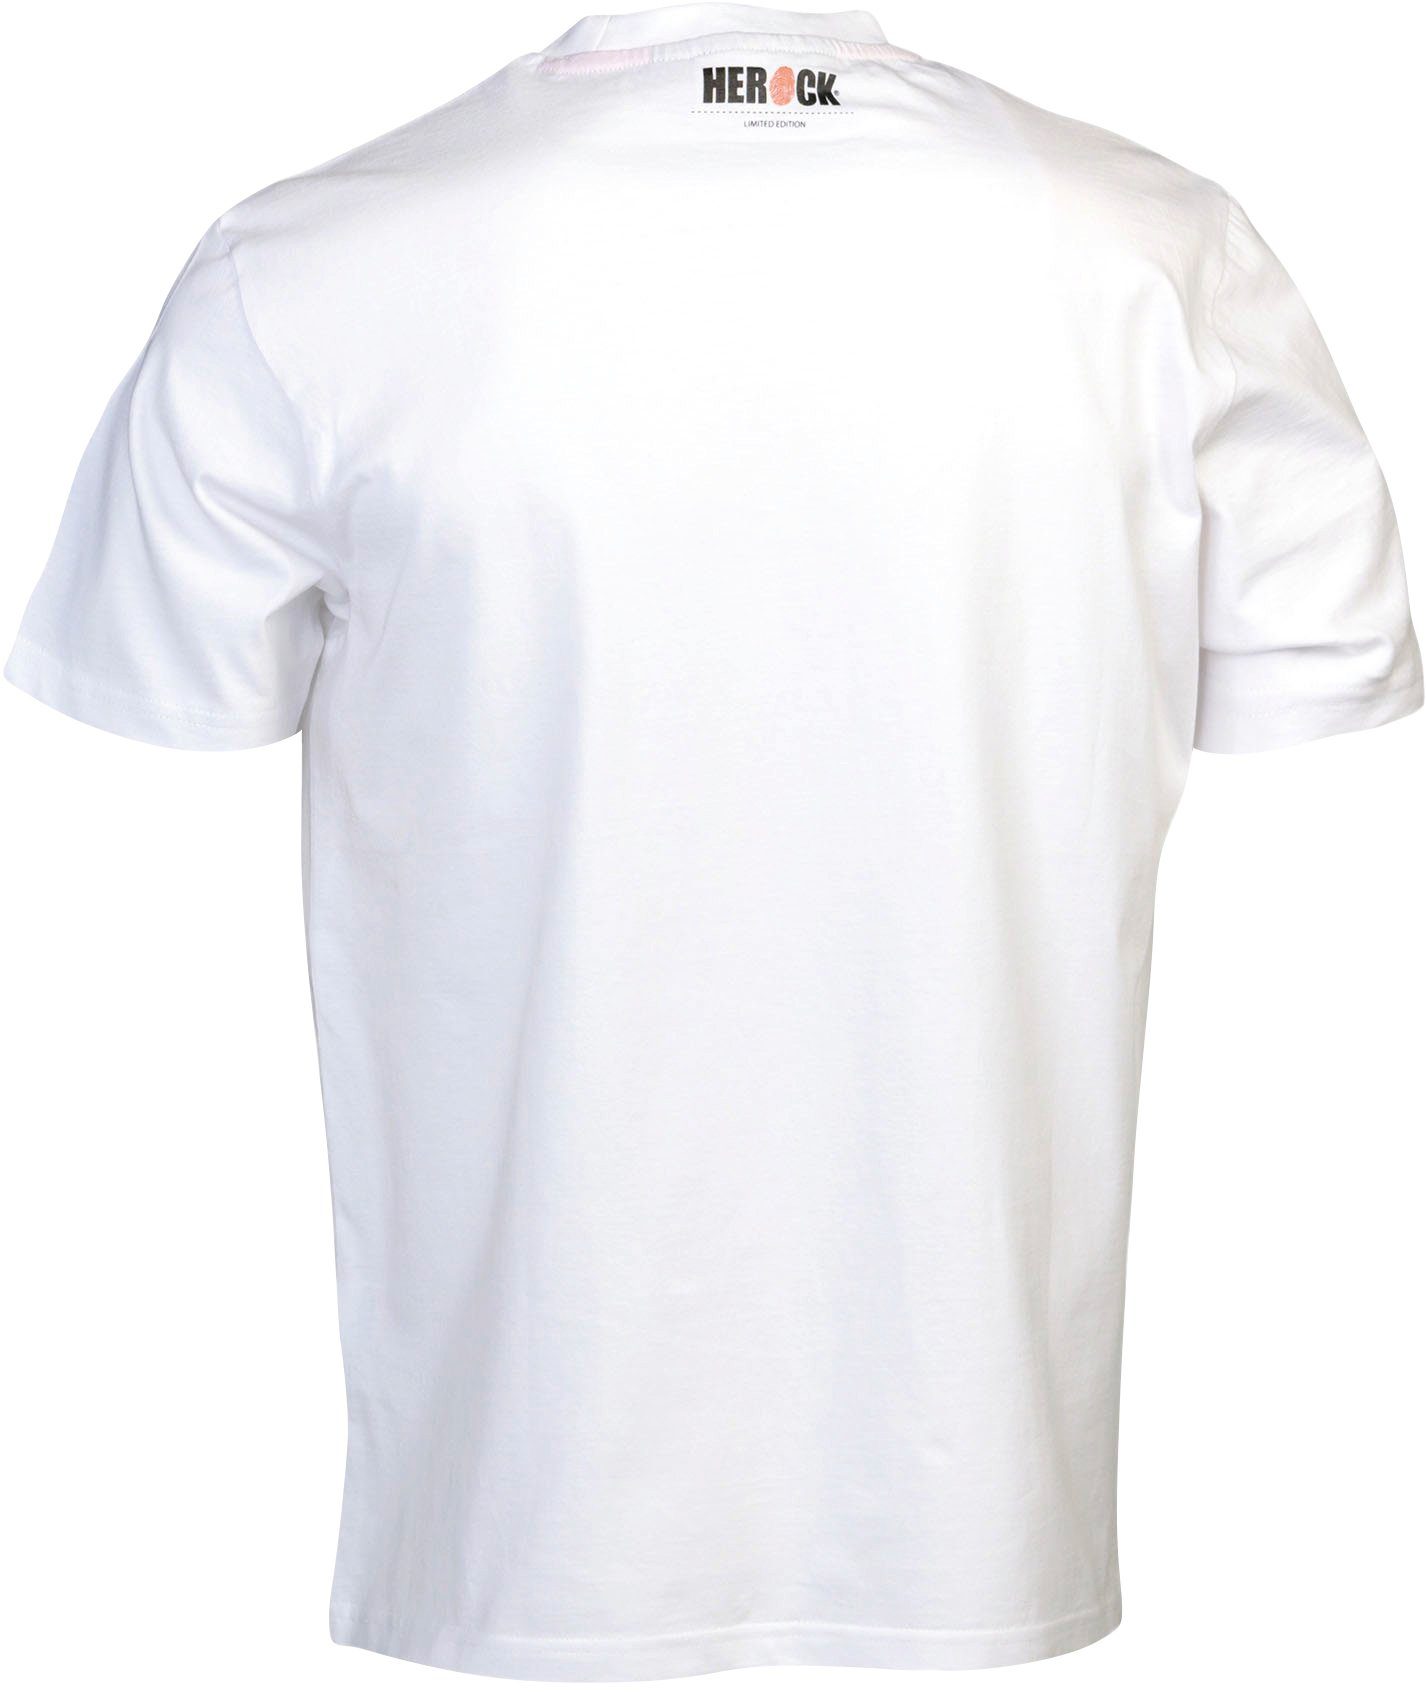 Herock T-Shirt Burst Mit Ärmeln, Herock®-Aufdruck kurzen Rundhalsausschnitt